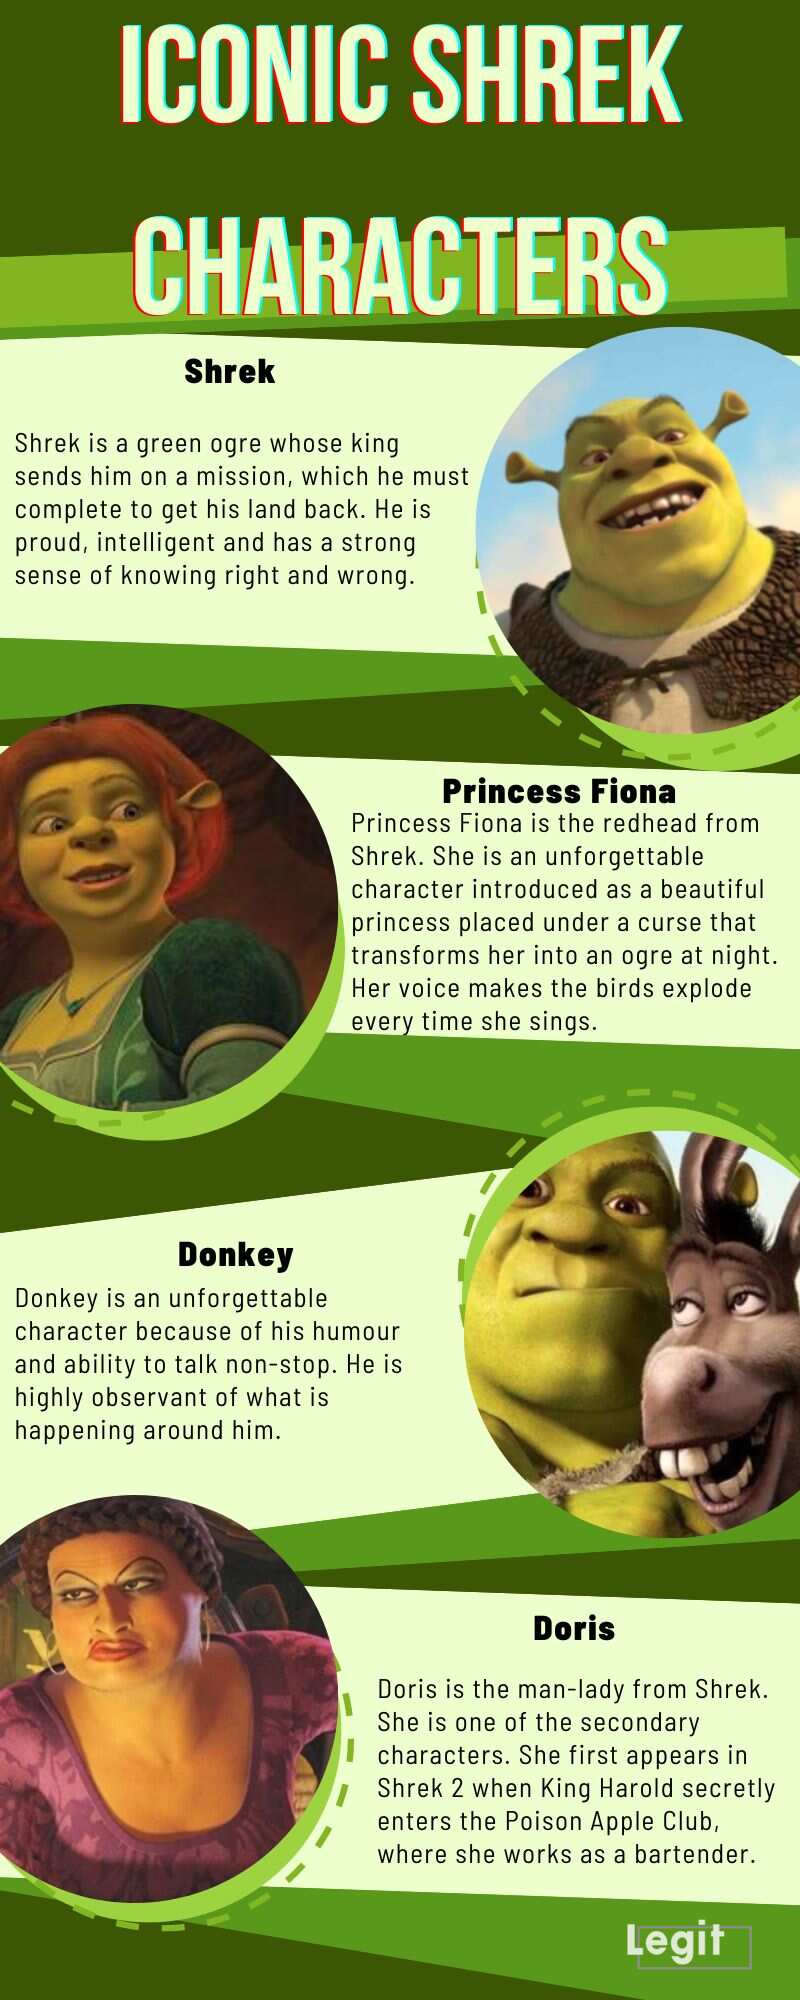 Iconic Shrek characters